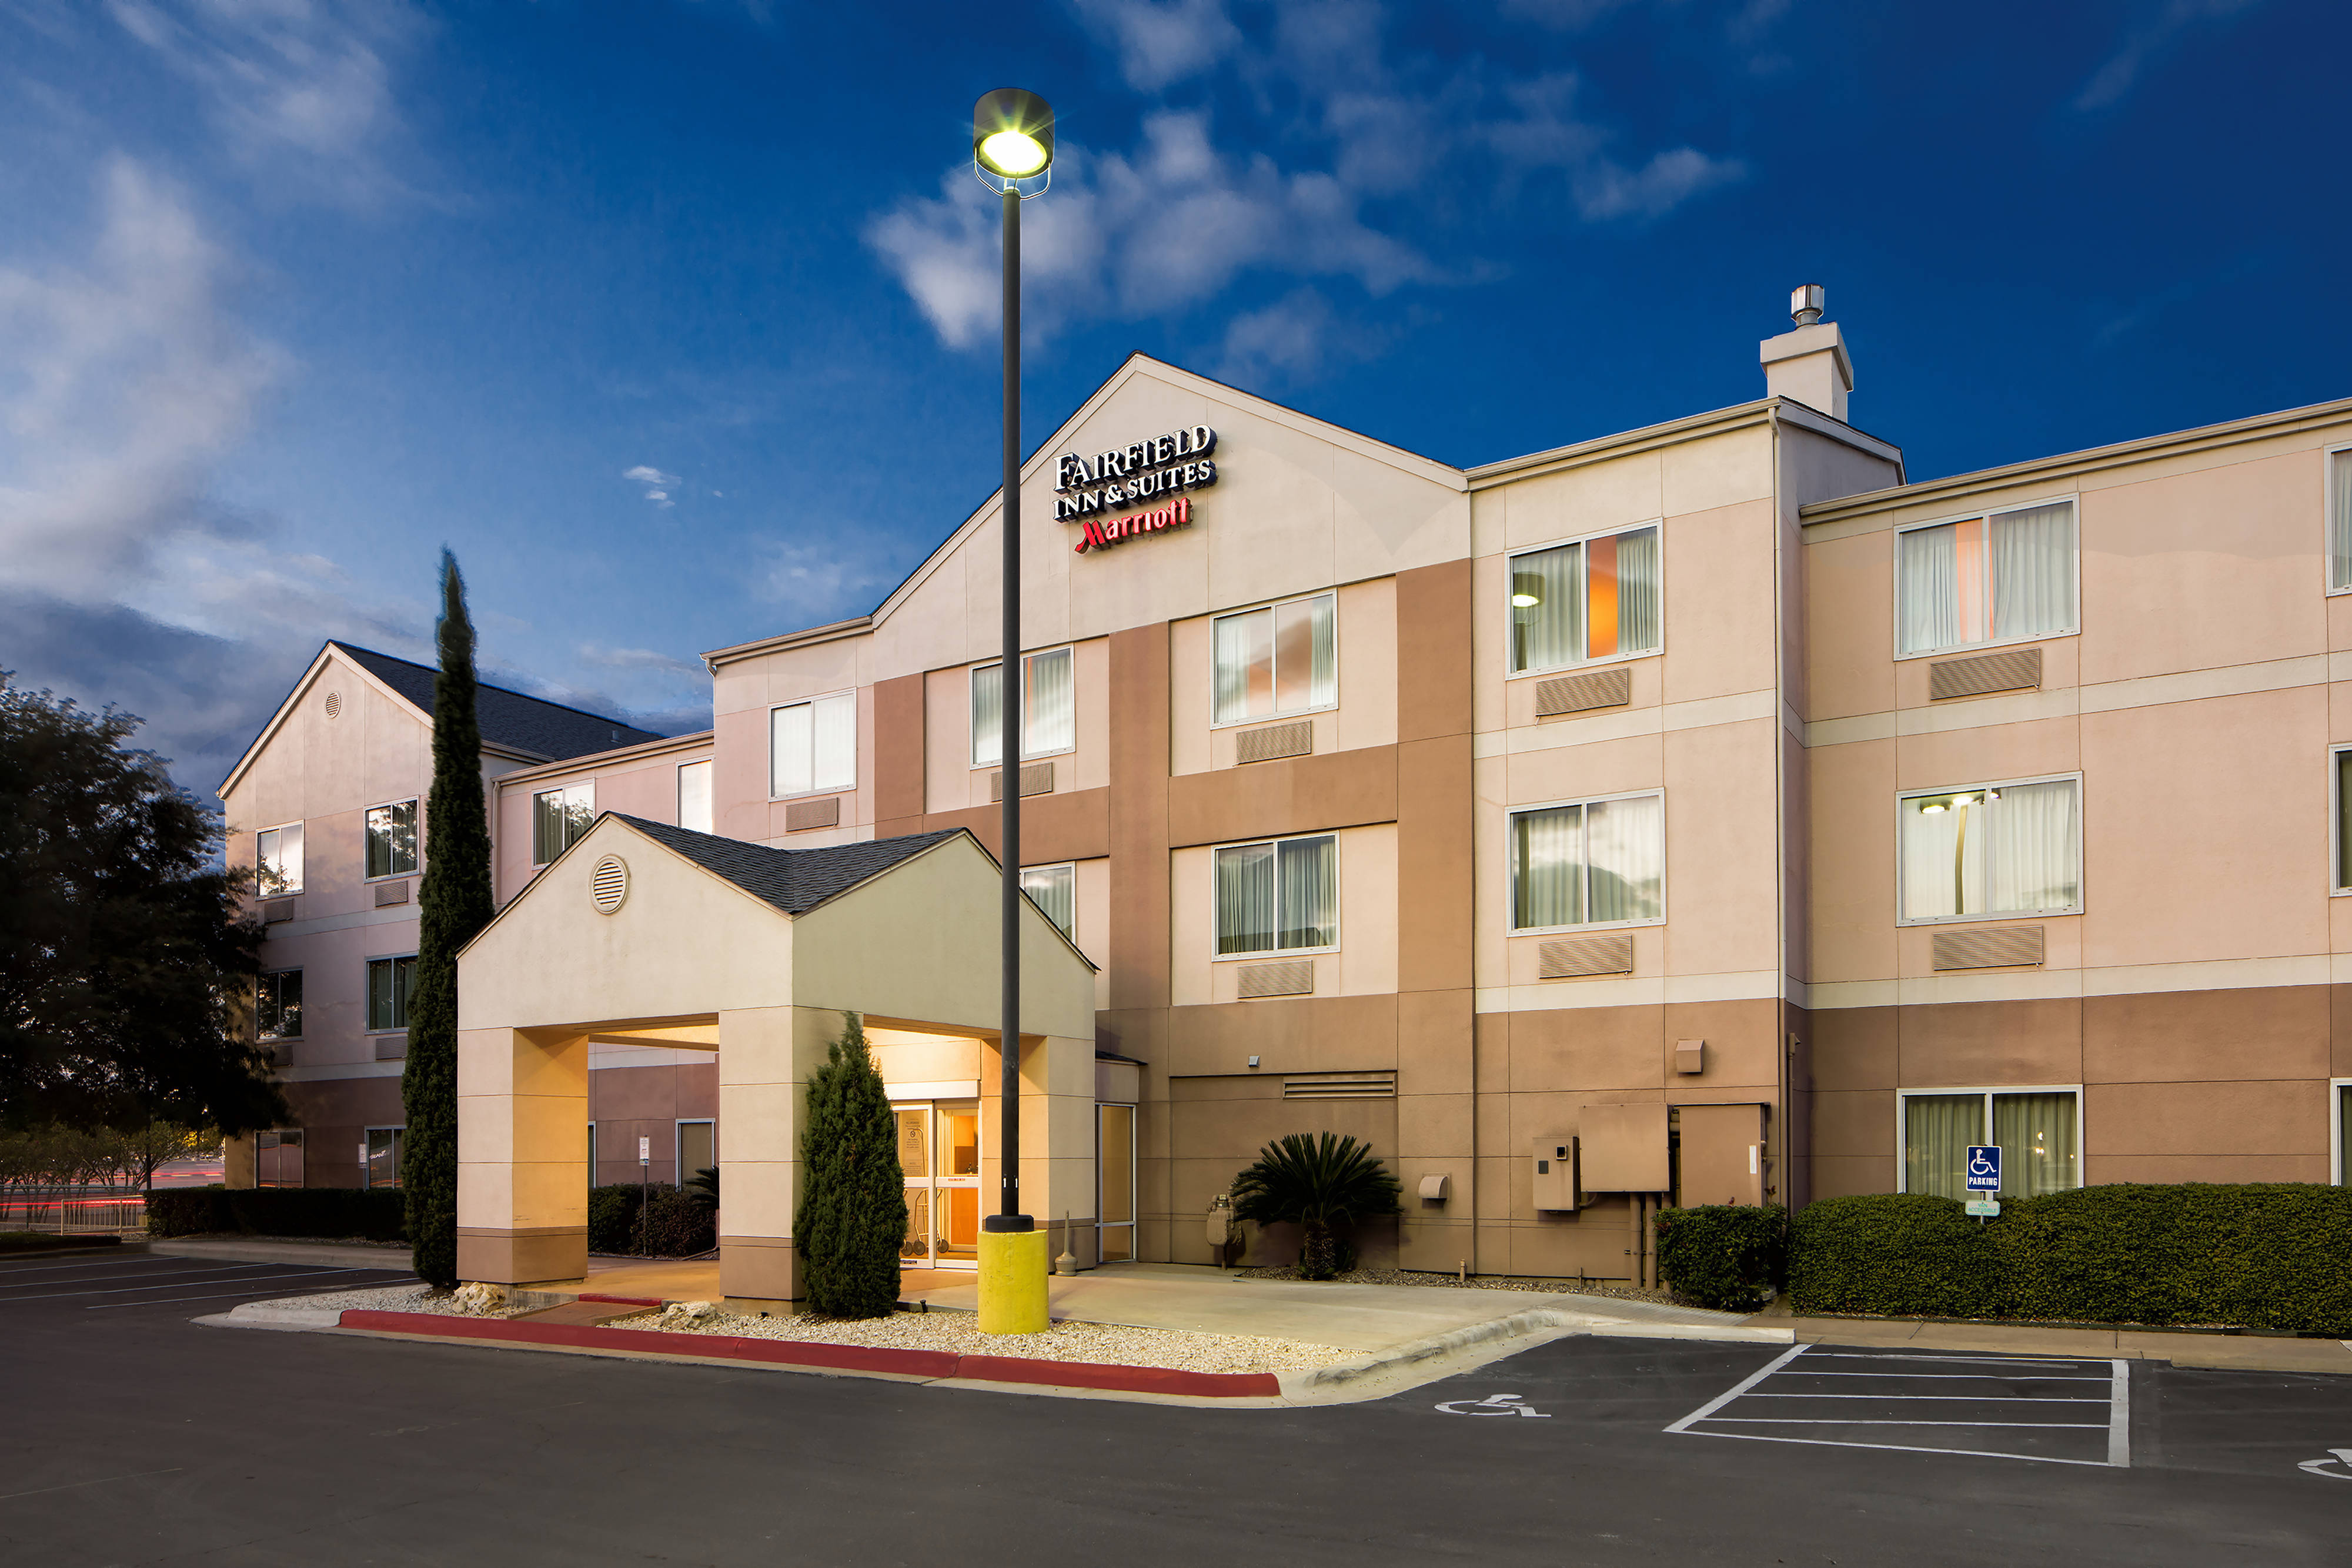 Photo of Fairfield Inn & Suites Austin South, Austin, TX